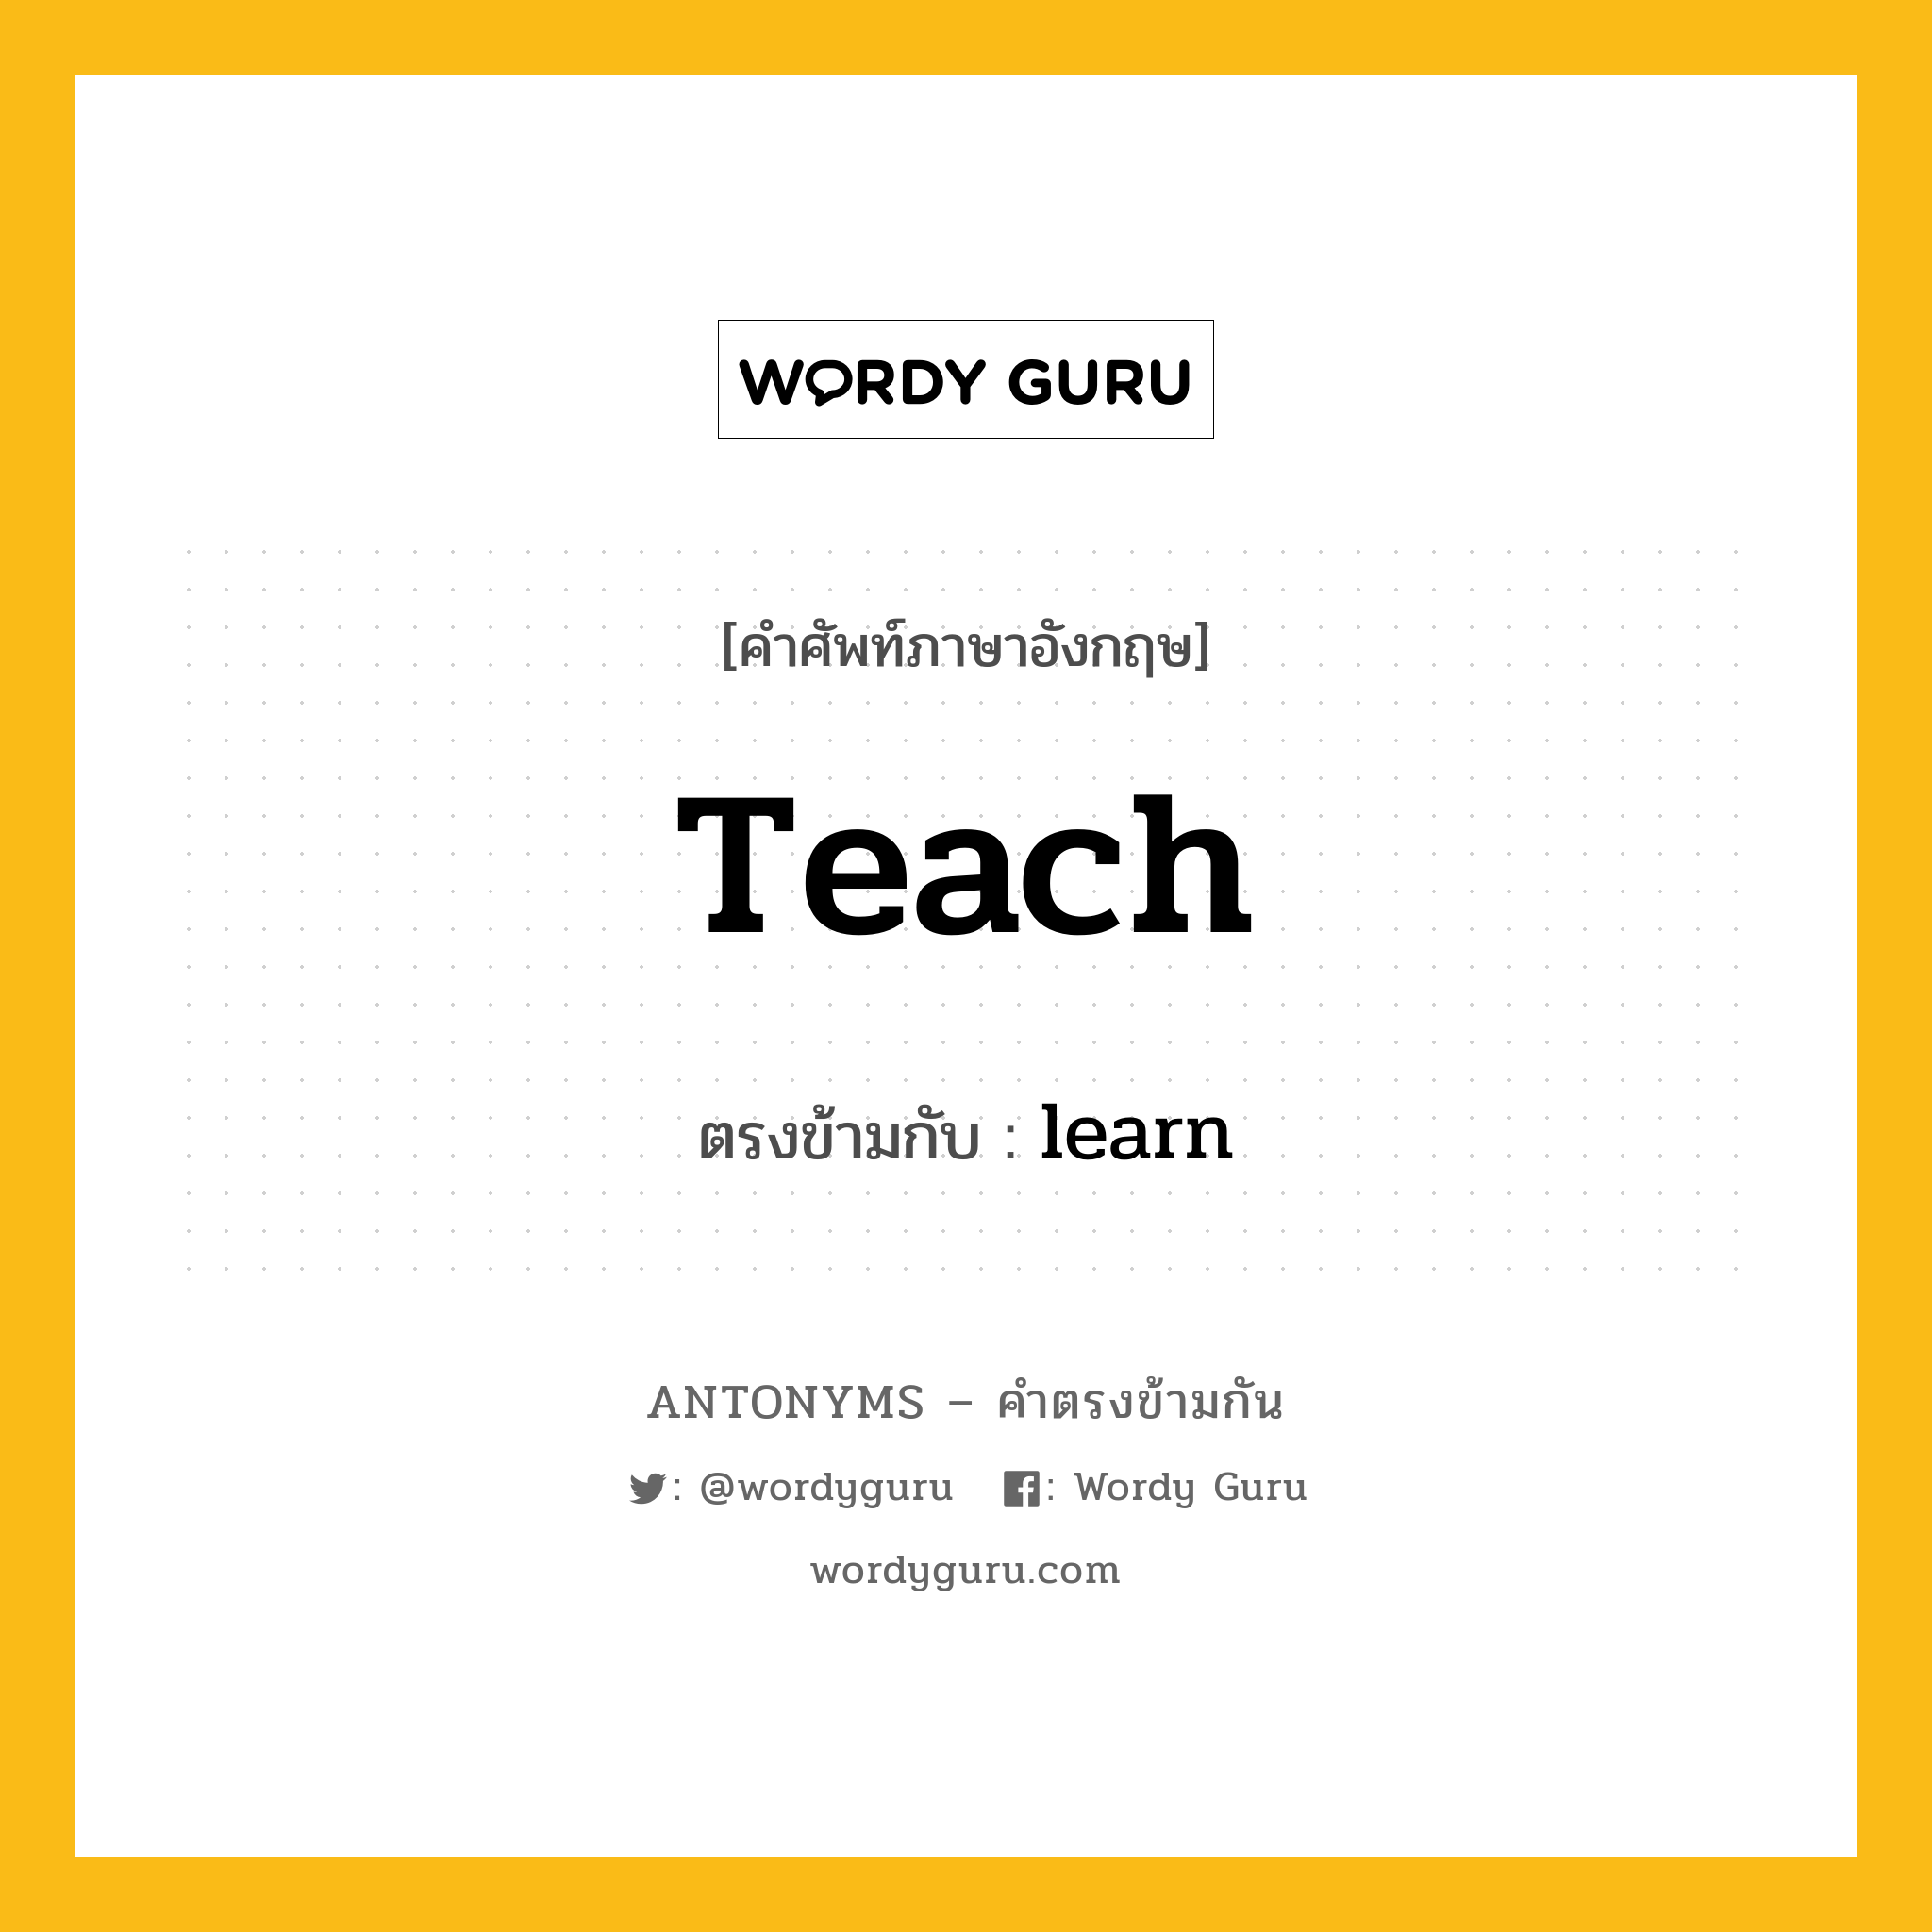 teach เป็นคำตรงข้ามกับคำไหนบ้าง?, คำศัพท์ภาษาอังกฤษ teach ตรงข้ามกับ learn หมวด learn